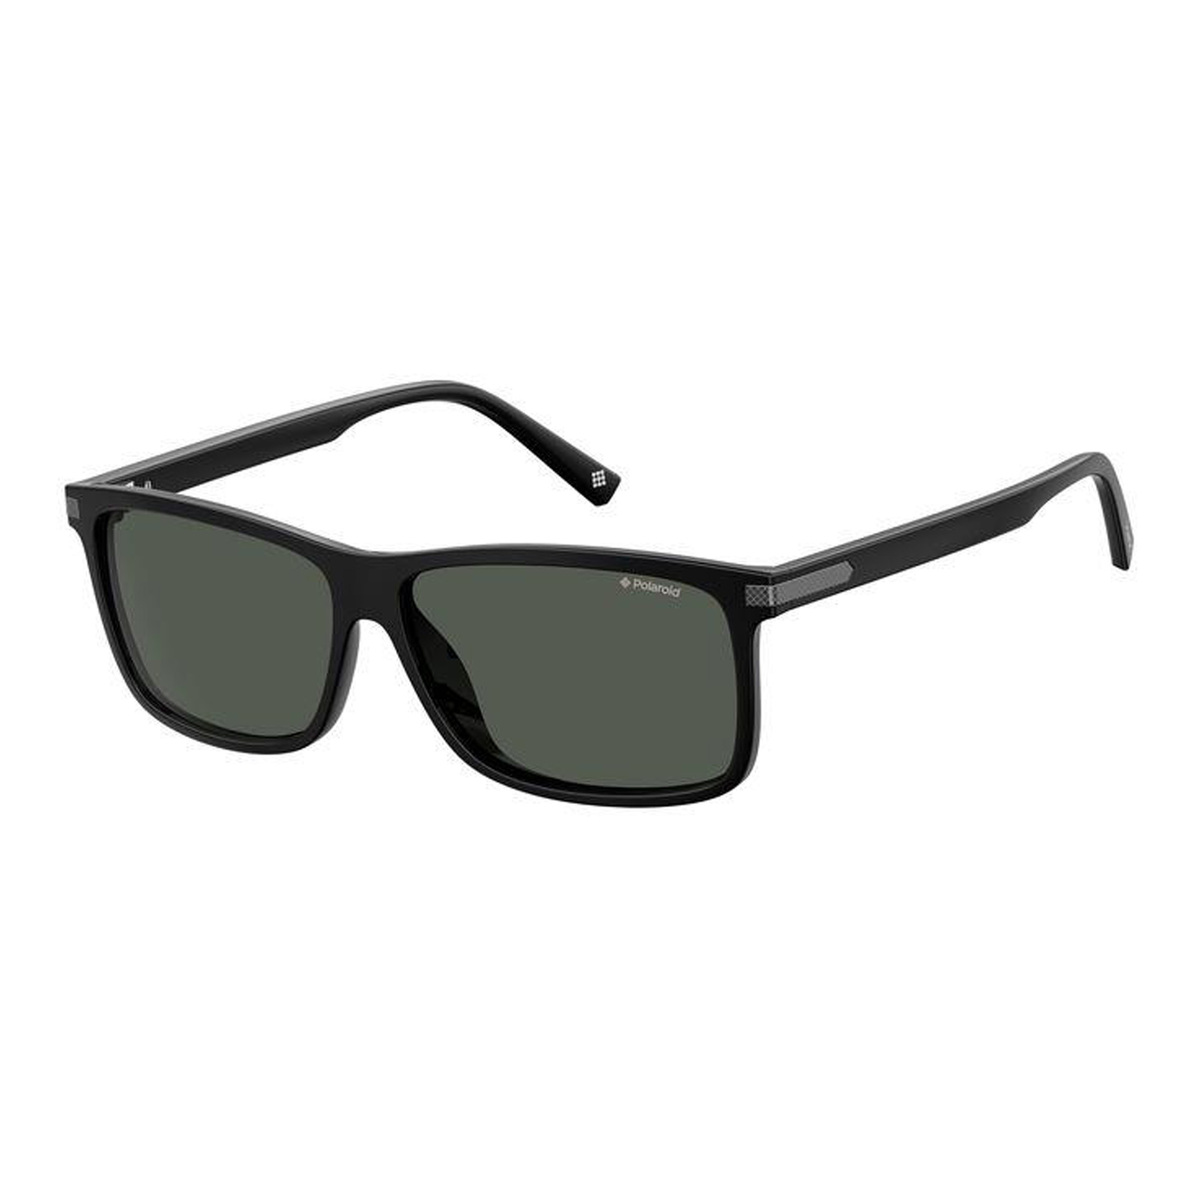 Polaroid Men's Rectangle Sunglasses, Grey, 2121SX 08AM9